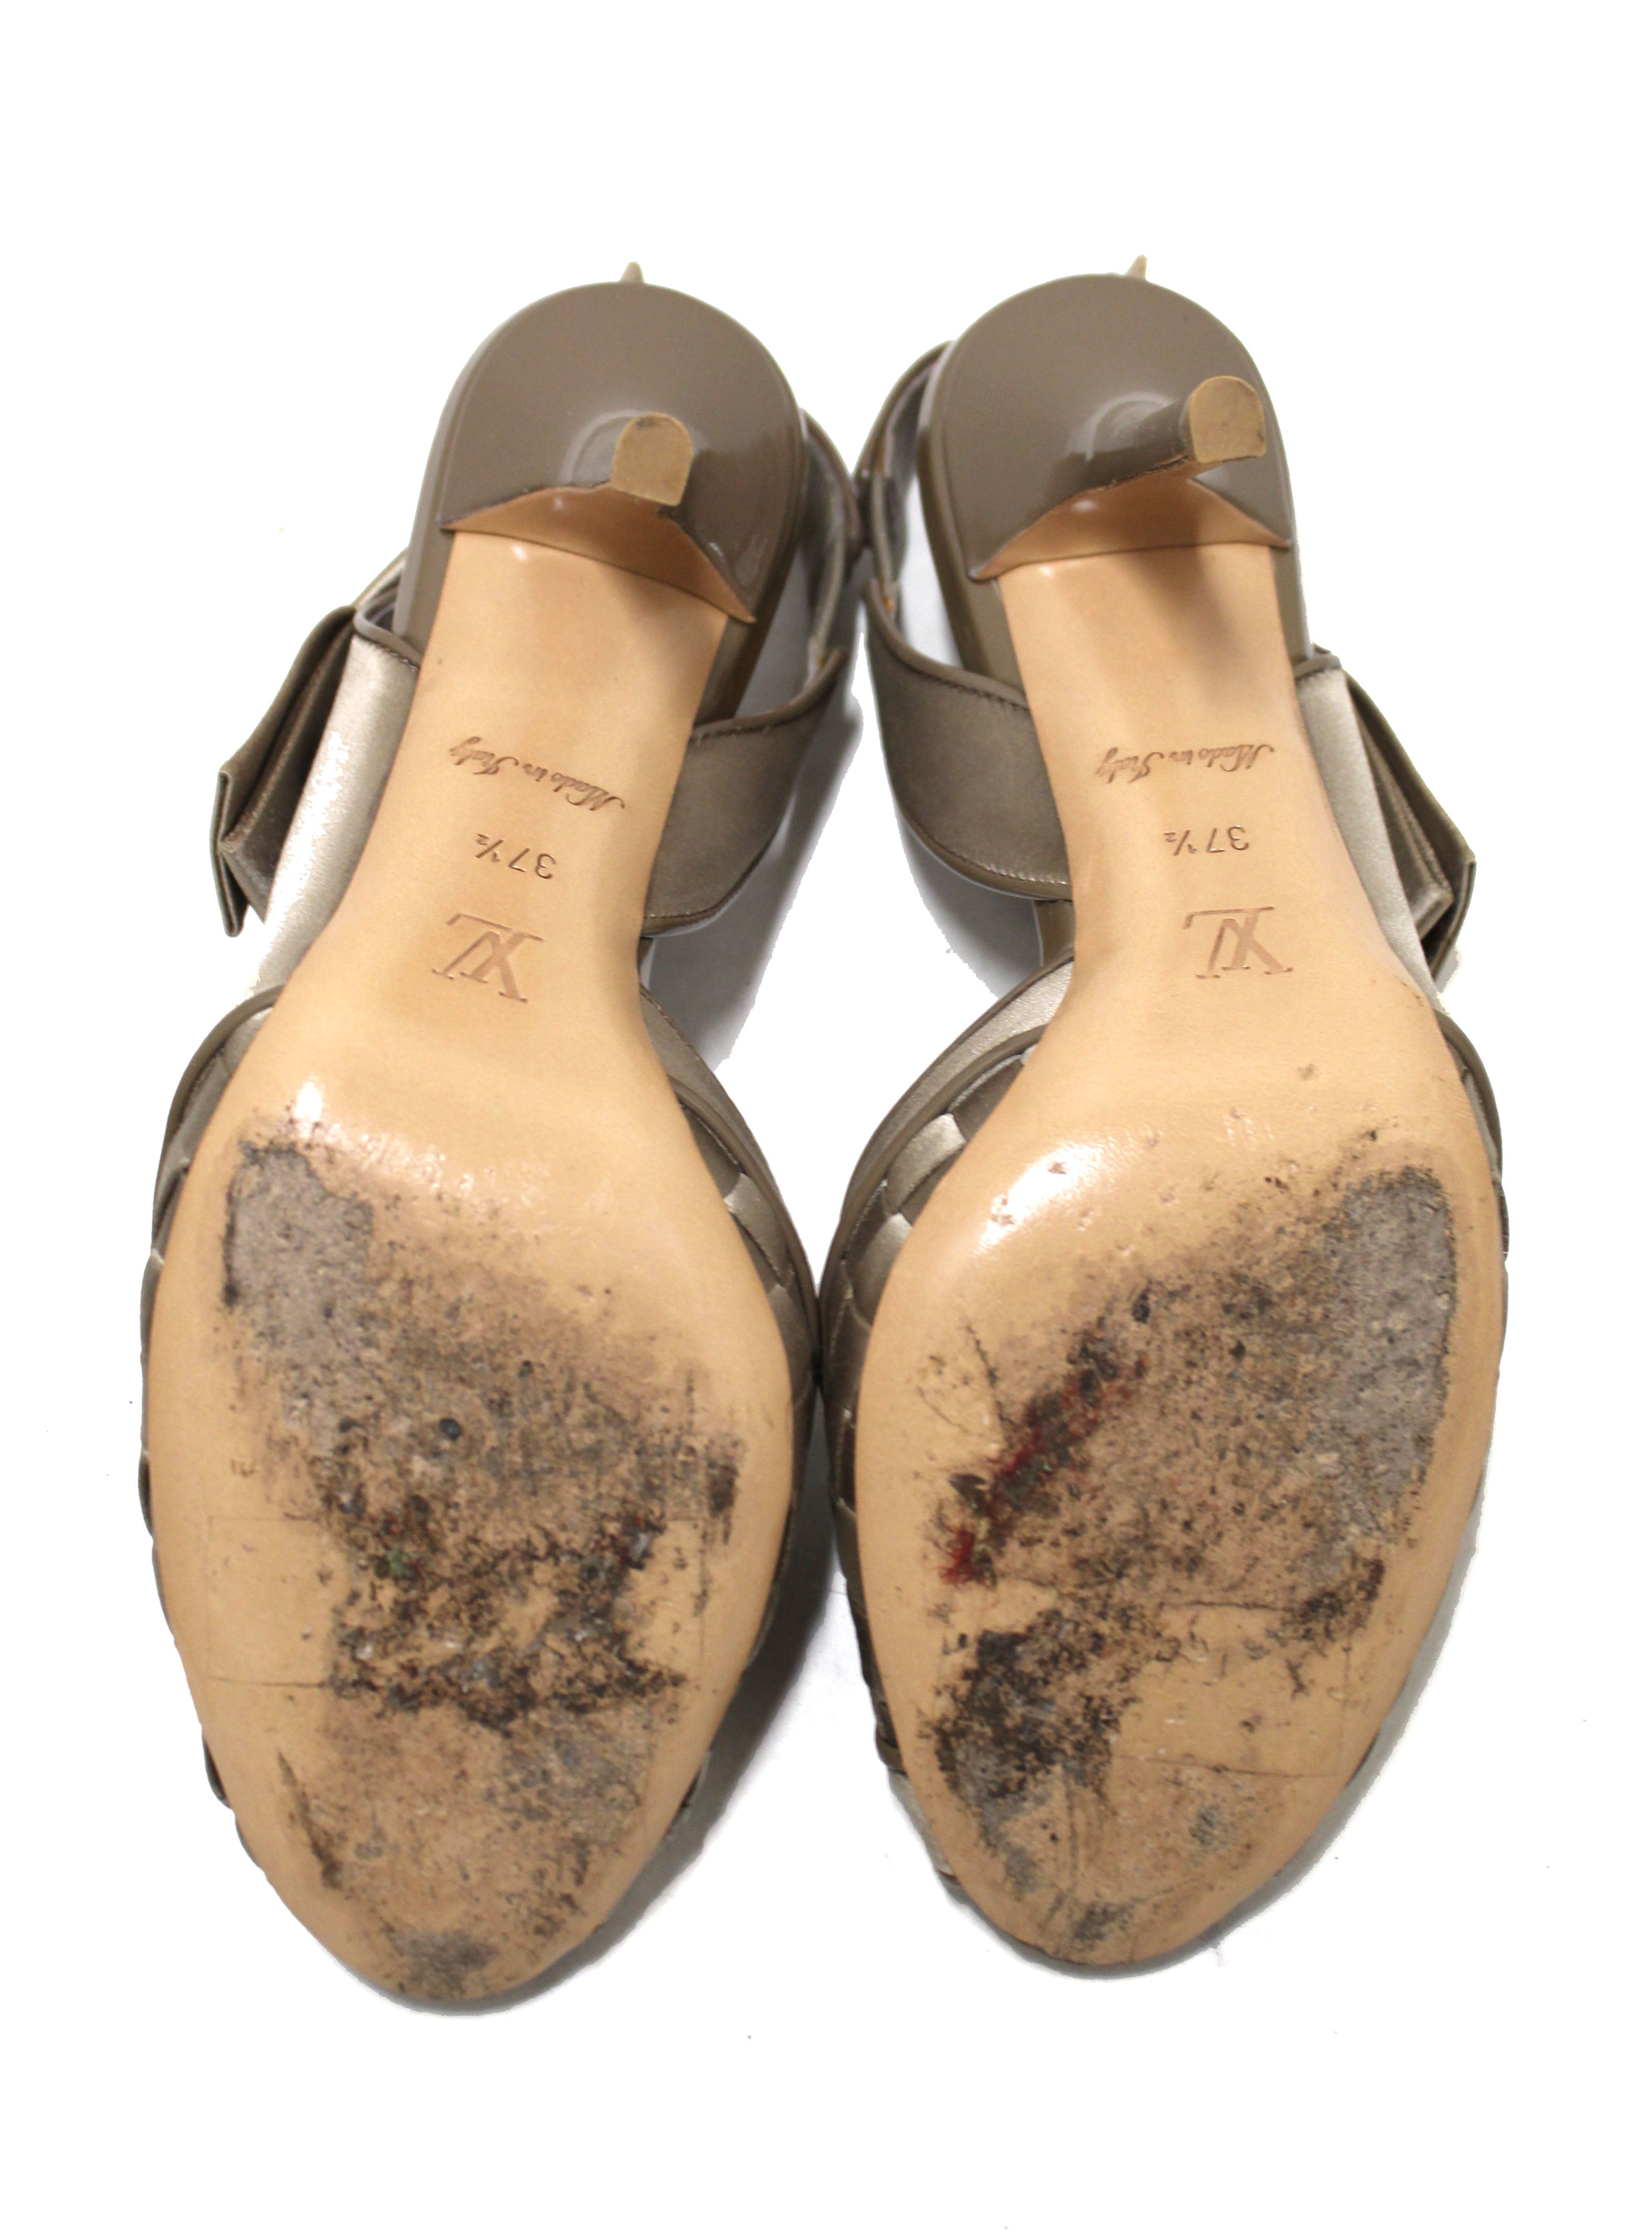 Authentic Louis Vuitton Taupe Satin Bow Woven Open Toe Pump Shoes Size 37.5